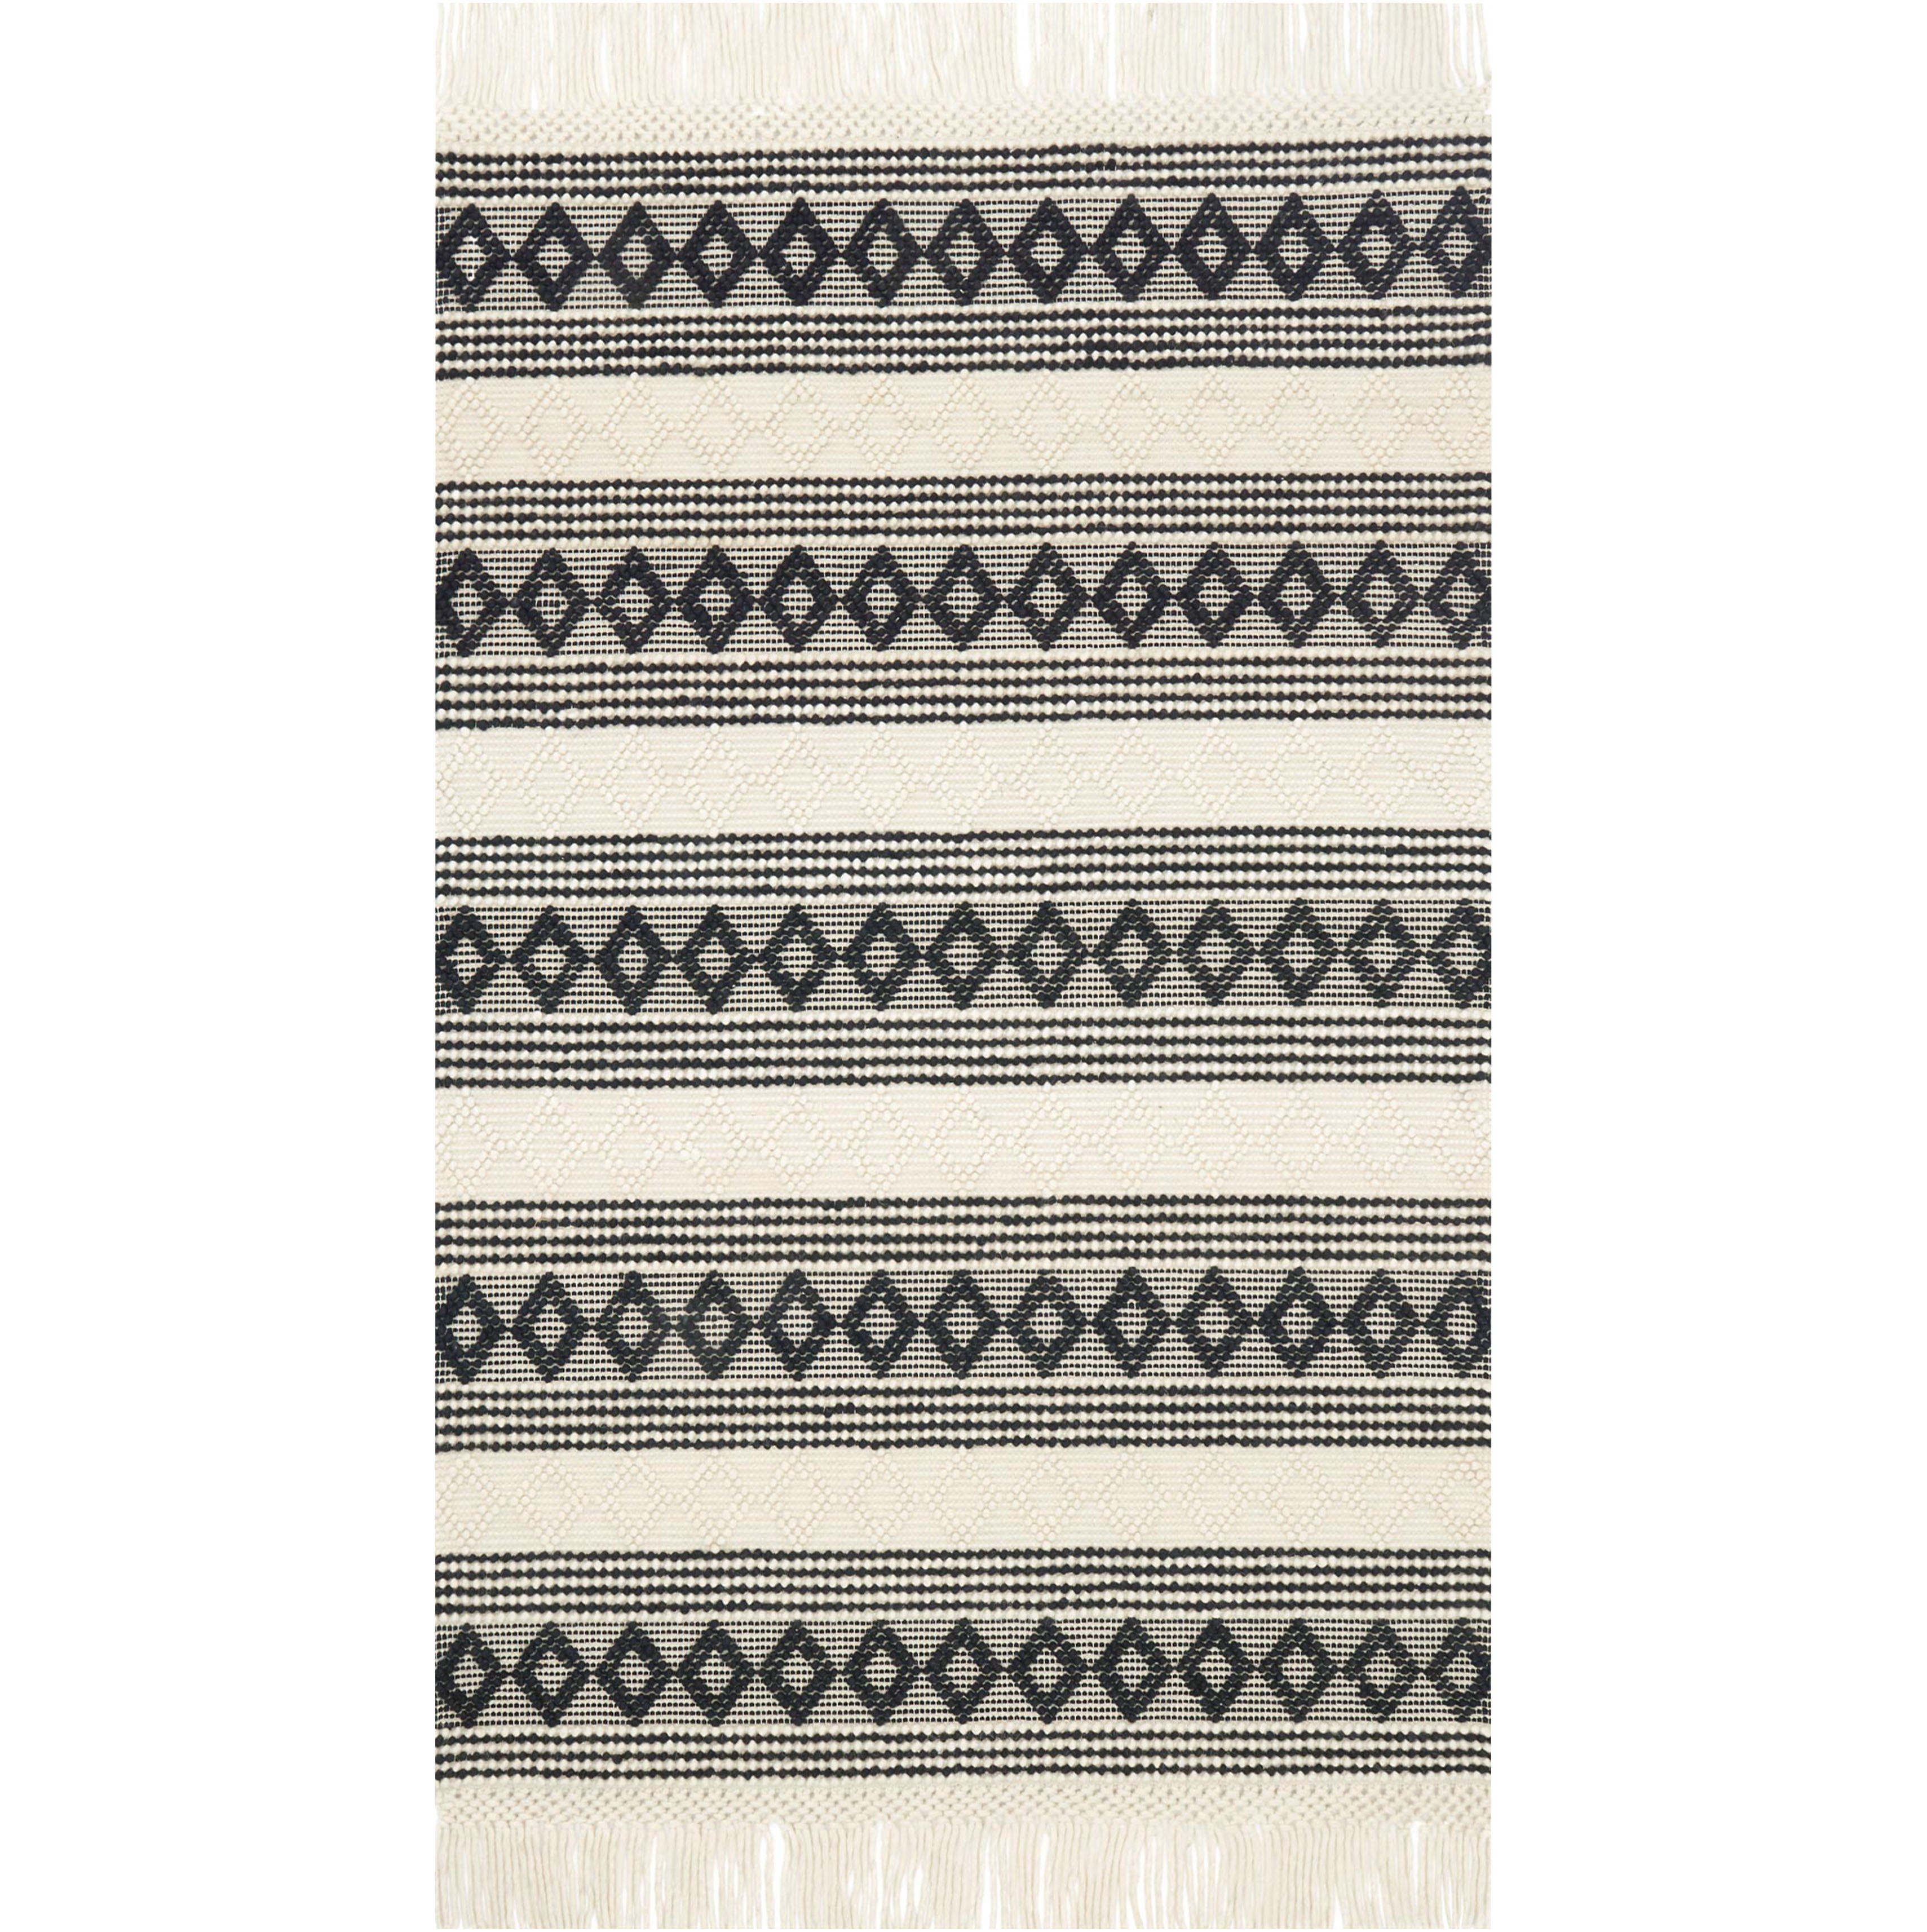 modern black and white diamond pattern rug with white tassels